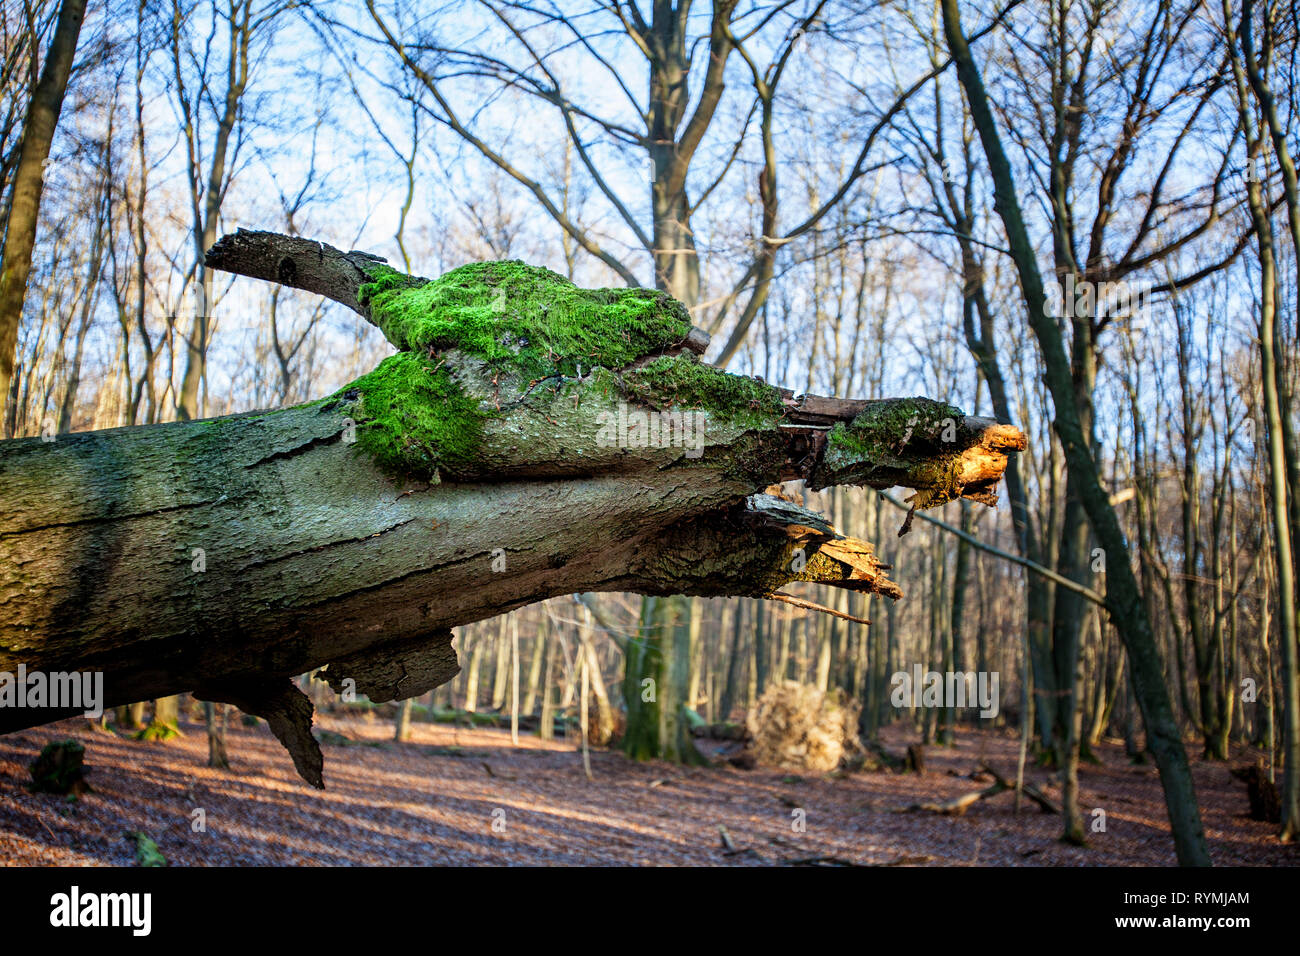 Dragon head in a tree, Primeval forest Urwald Sababurg, Hofgeismar, Weser Uplands, Weserbergland, Hesse, Germany Stock Photo